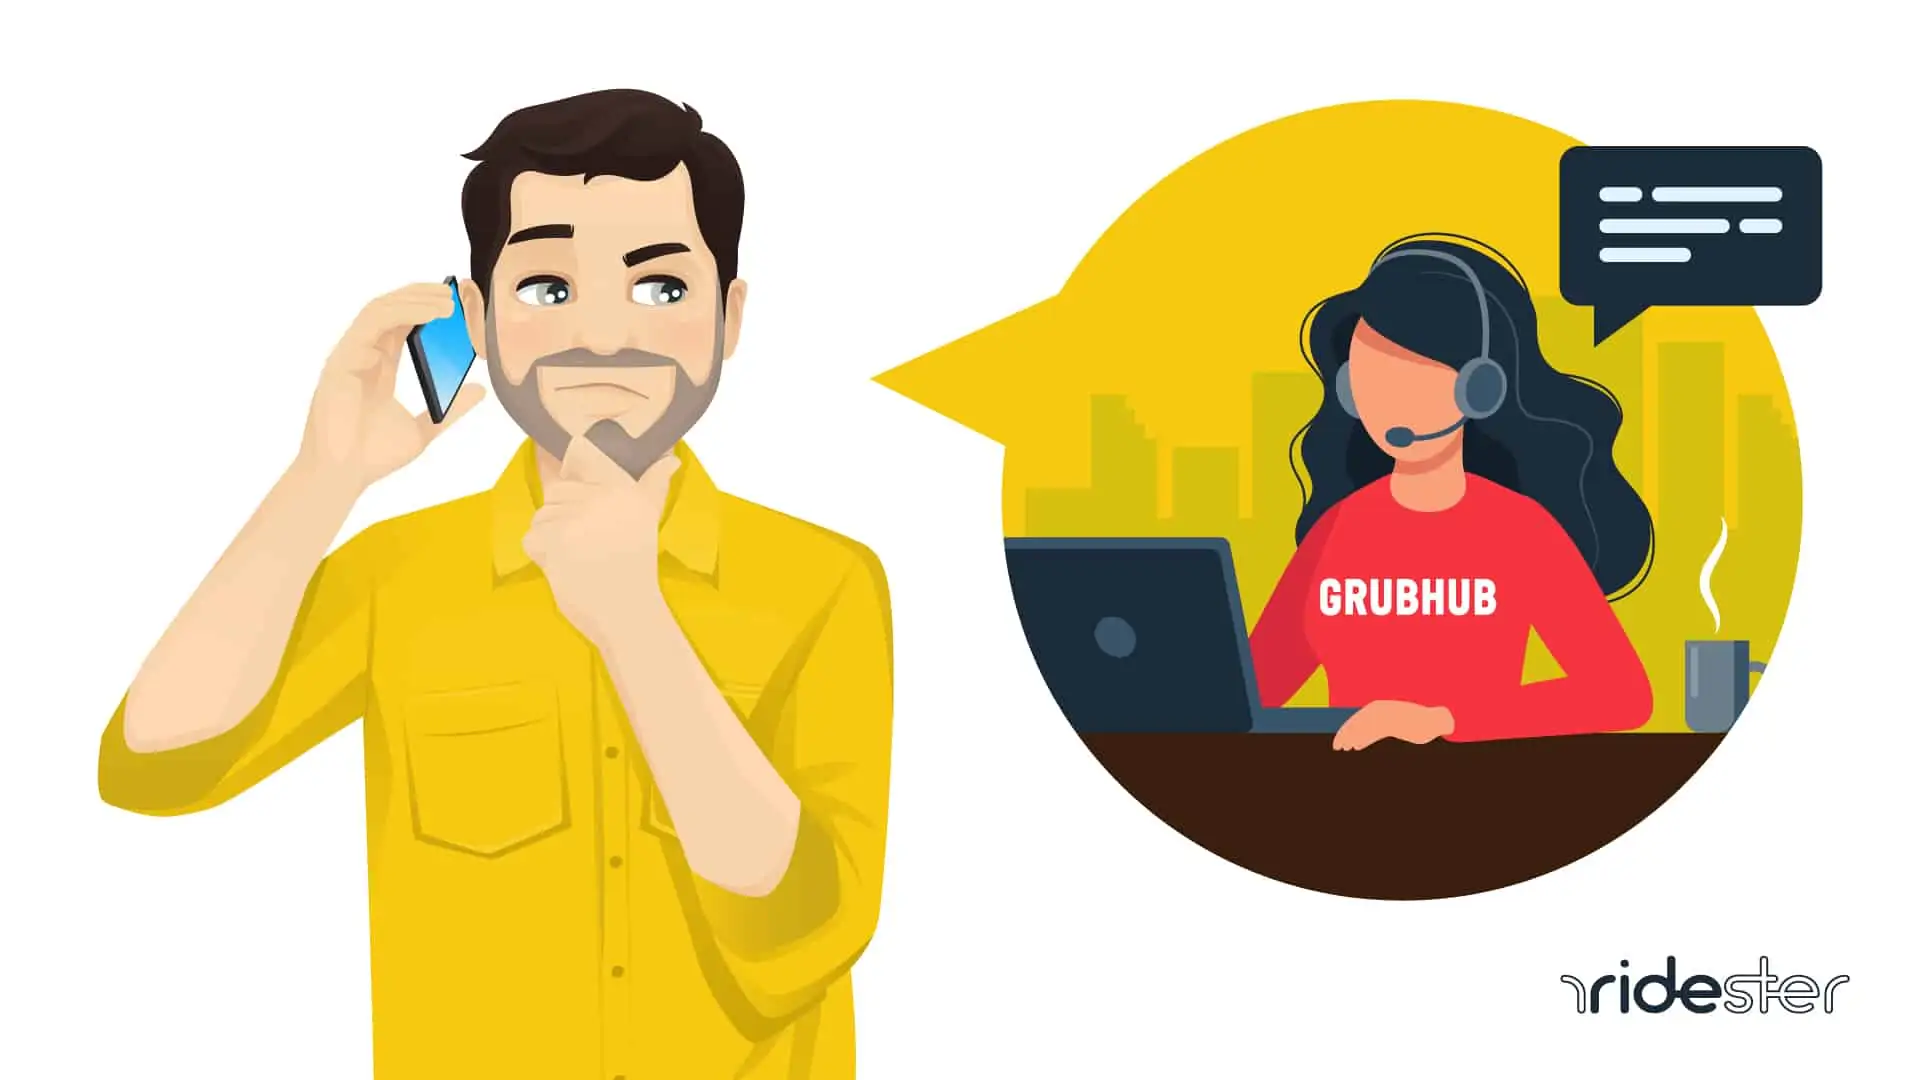 3 Fast Ways To Contact Grubhub Customer Service In 2023